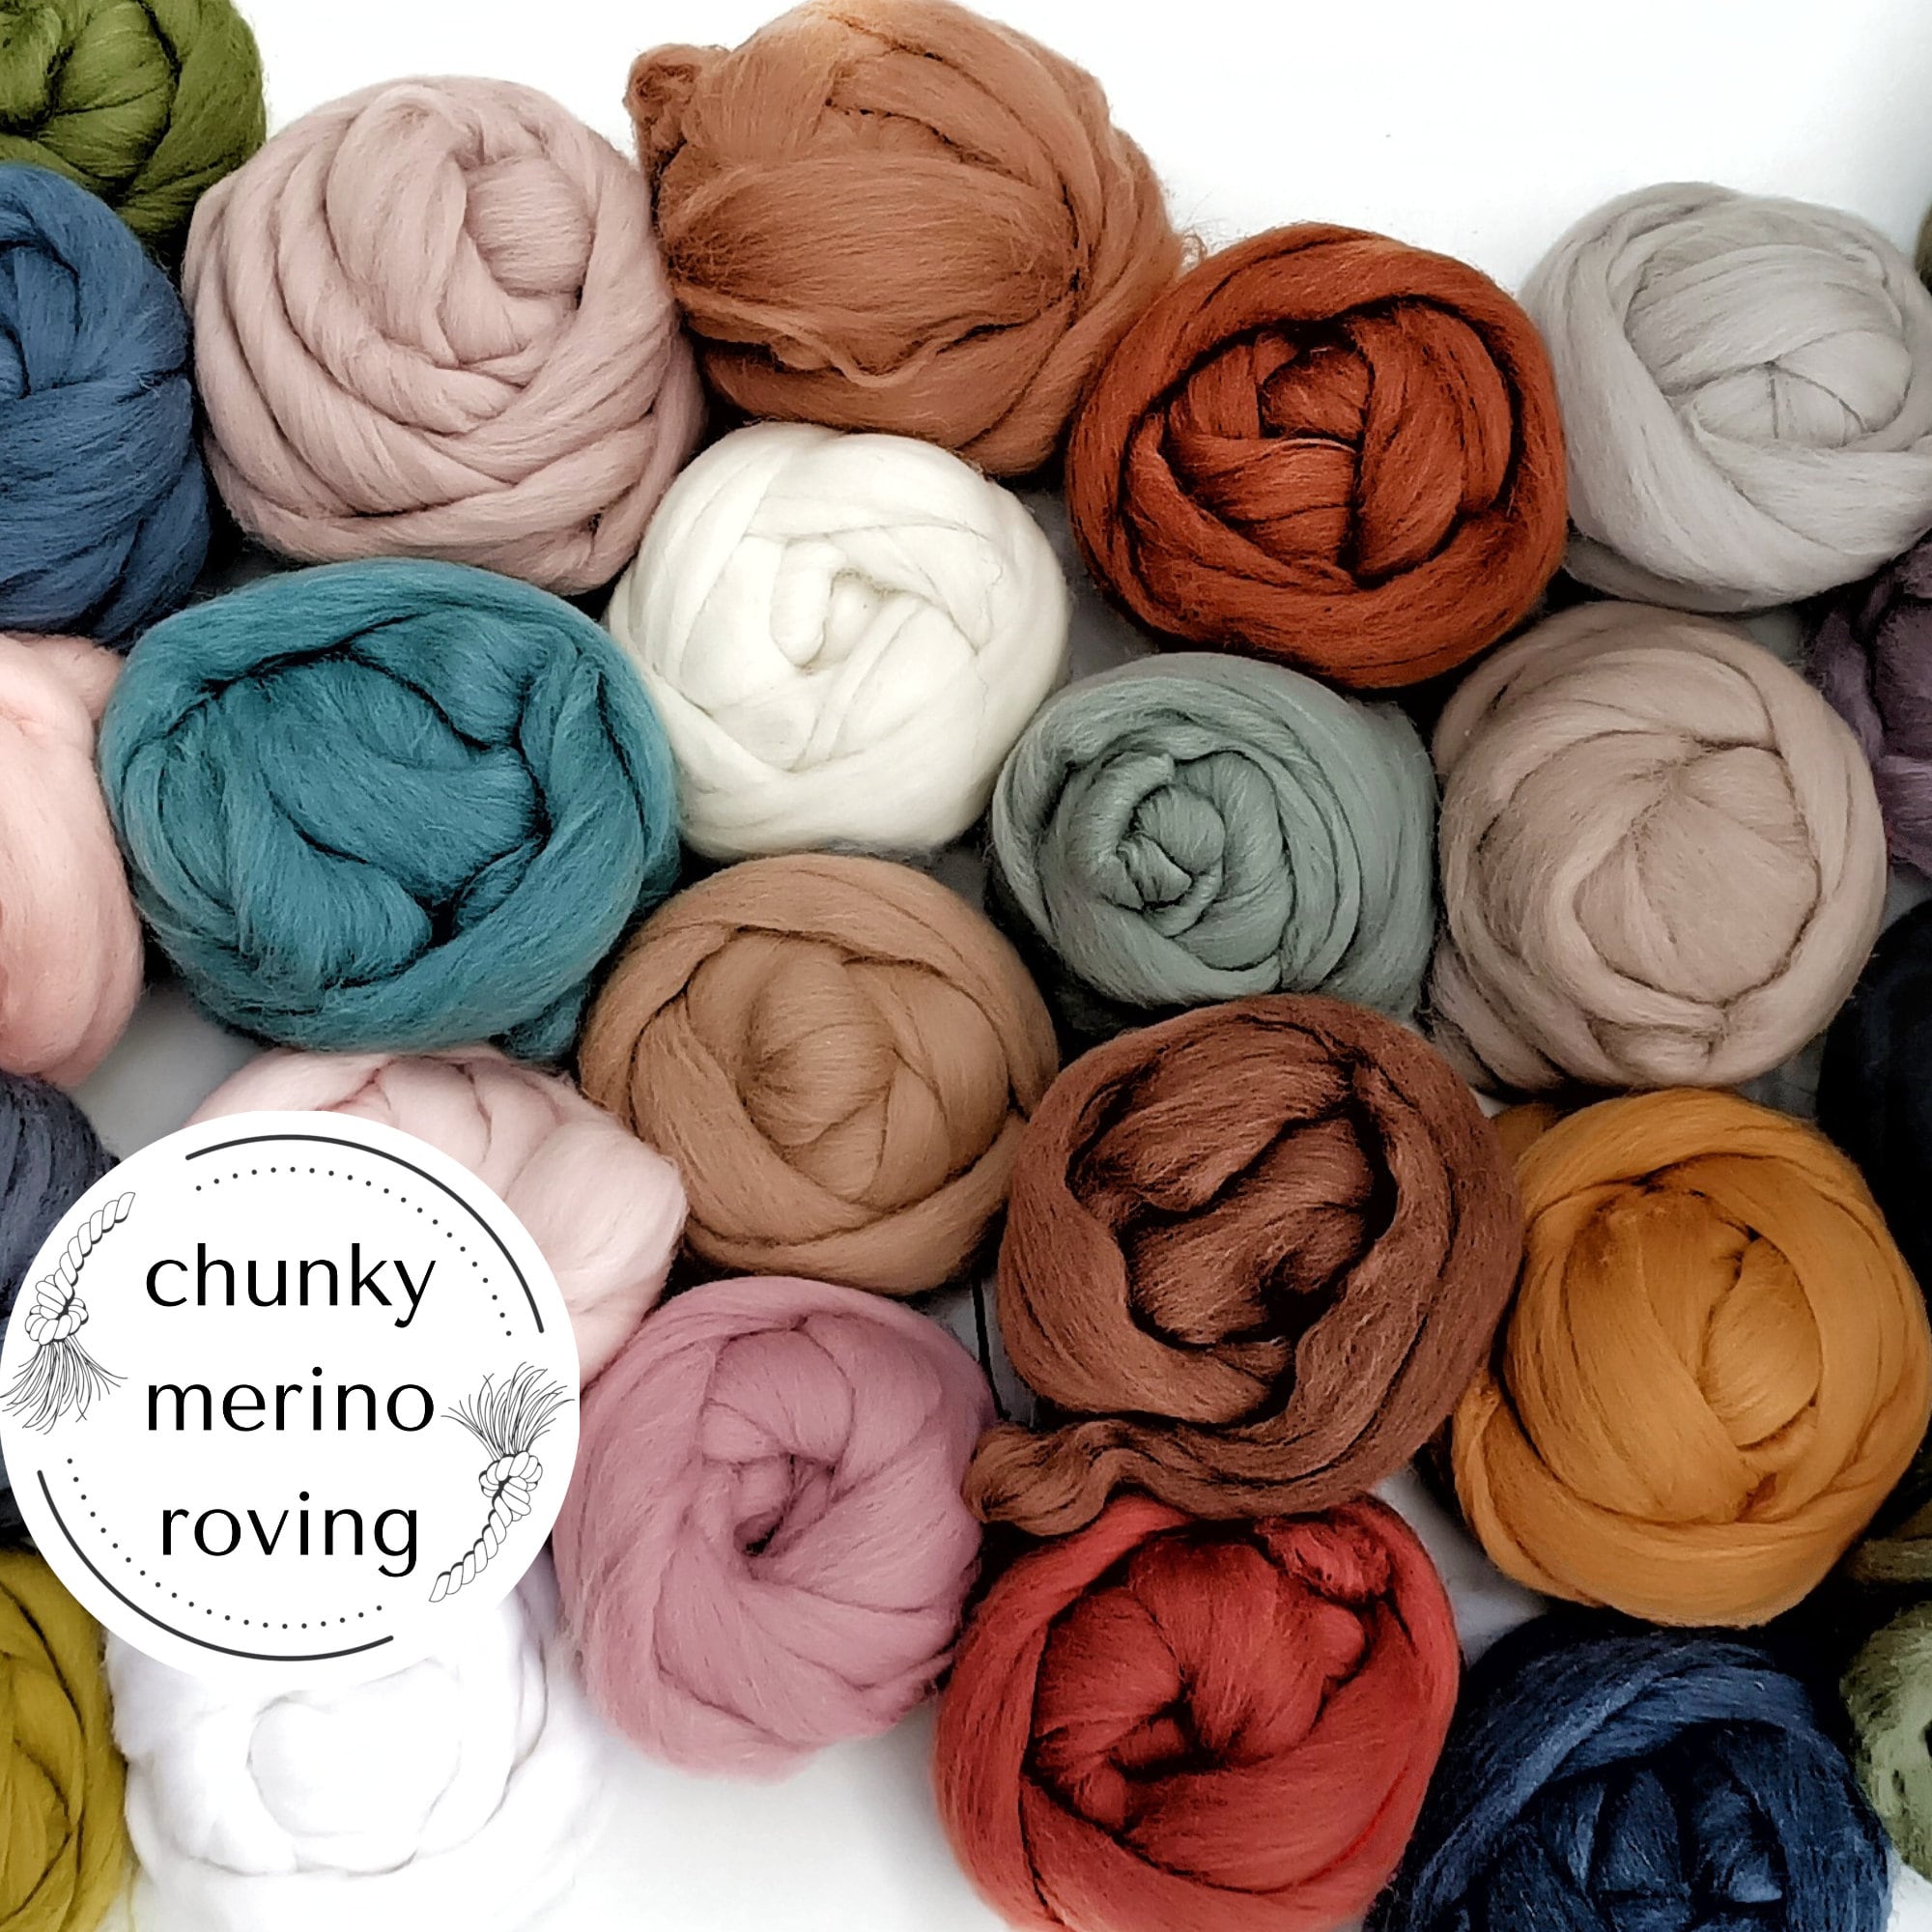 Revolution Fibers Merino Wool Roving 1 lb (16 ounces) for Spinning | Soft Chunky Jumbo Yarn for Arm Knitting Blanket |100% Natural Undyed (Off-White)